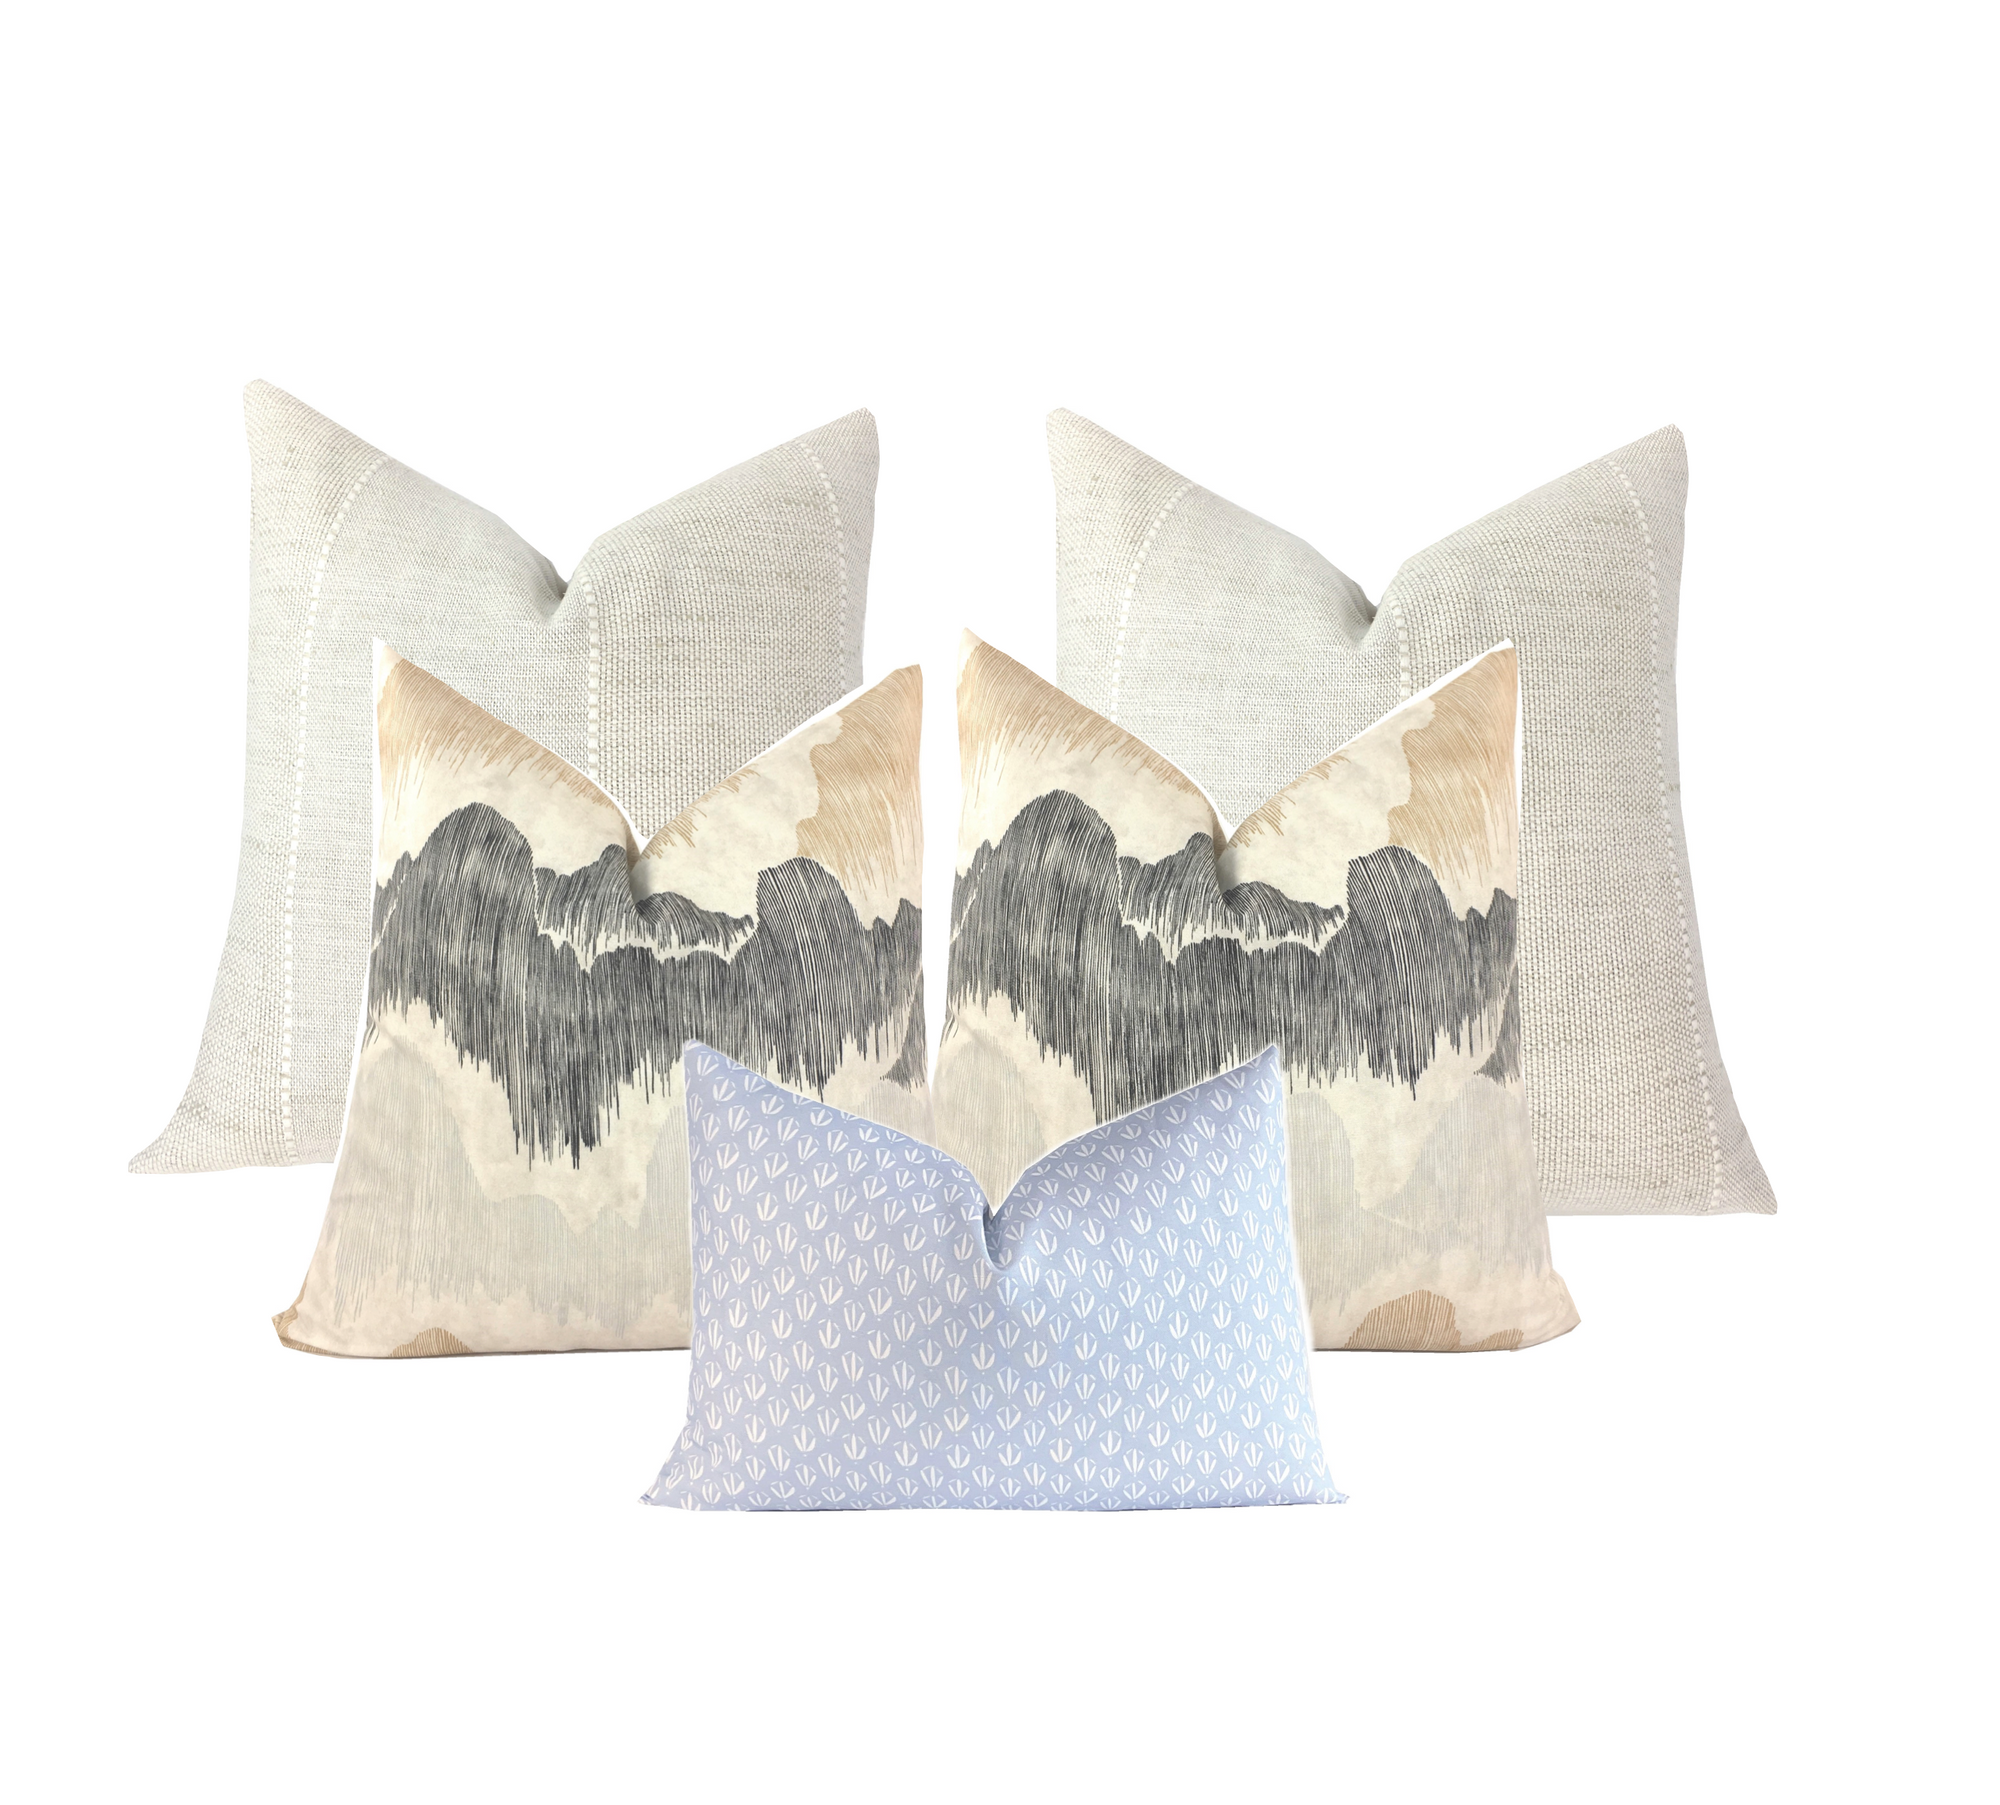 Pillow Combination #2 | 5 Pillow Covers |  Caravane Oasis | Cascadia Basalt | Haint Blue | Sofa Pillow Combo